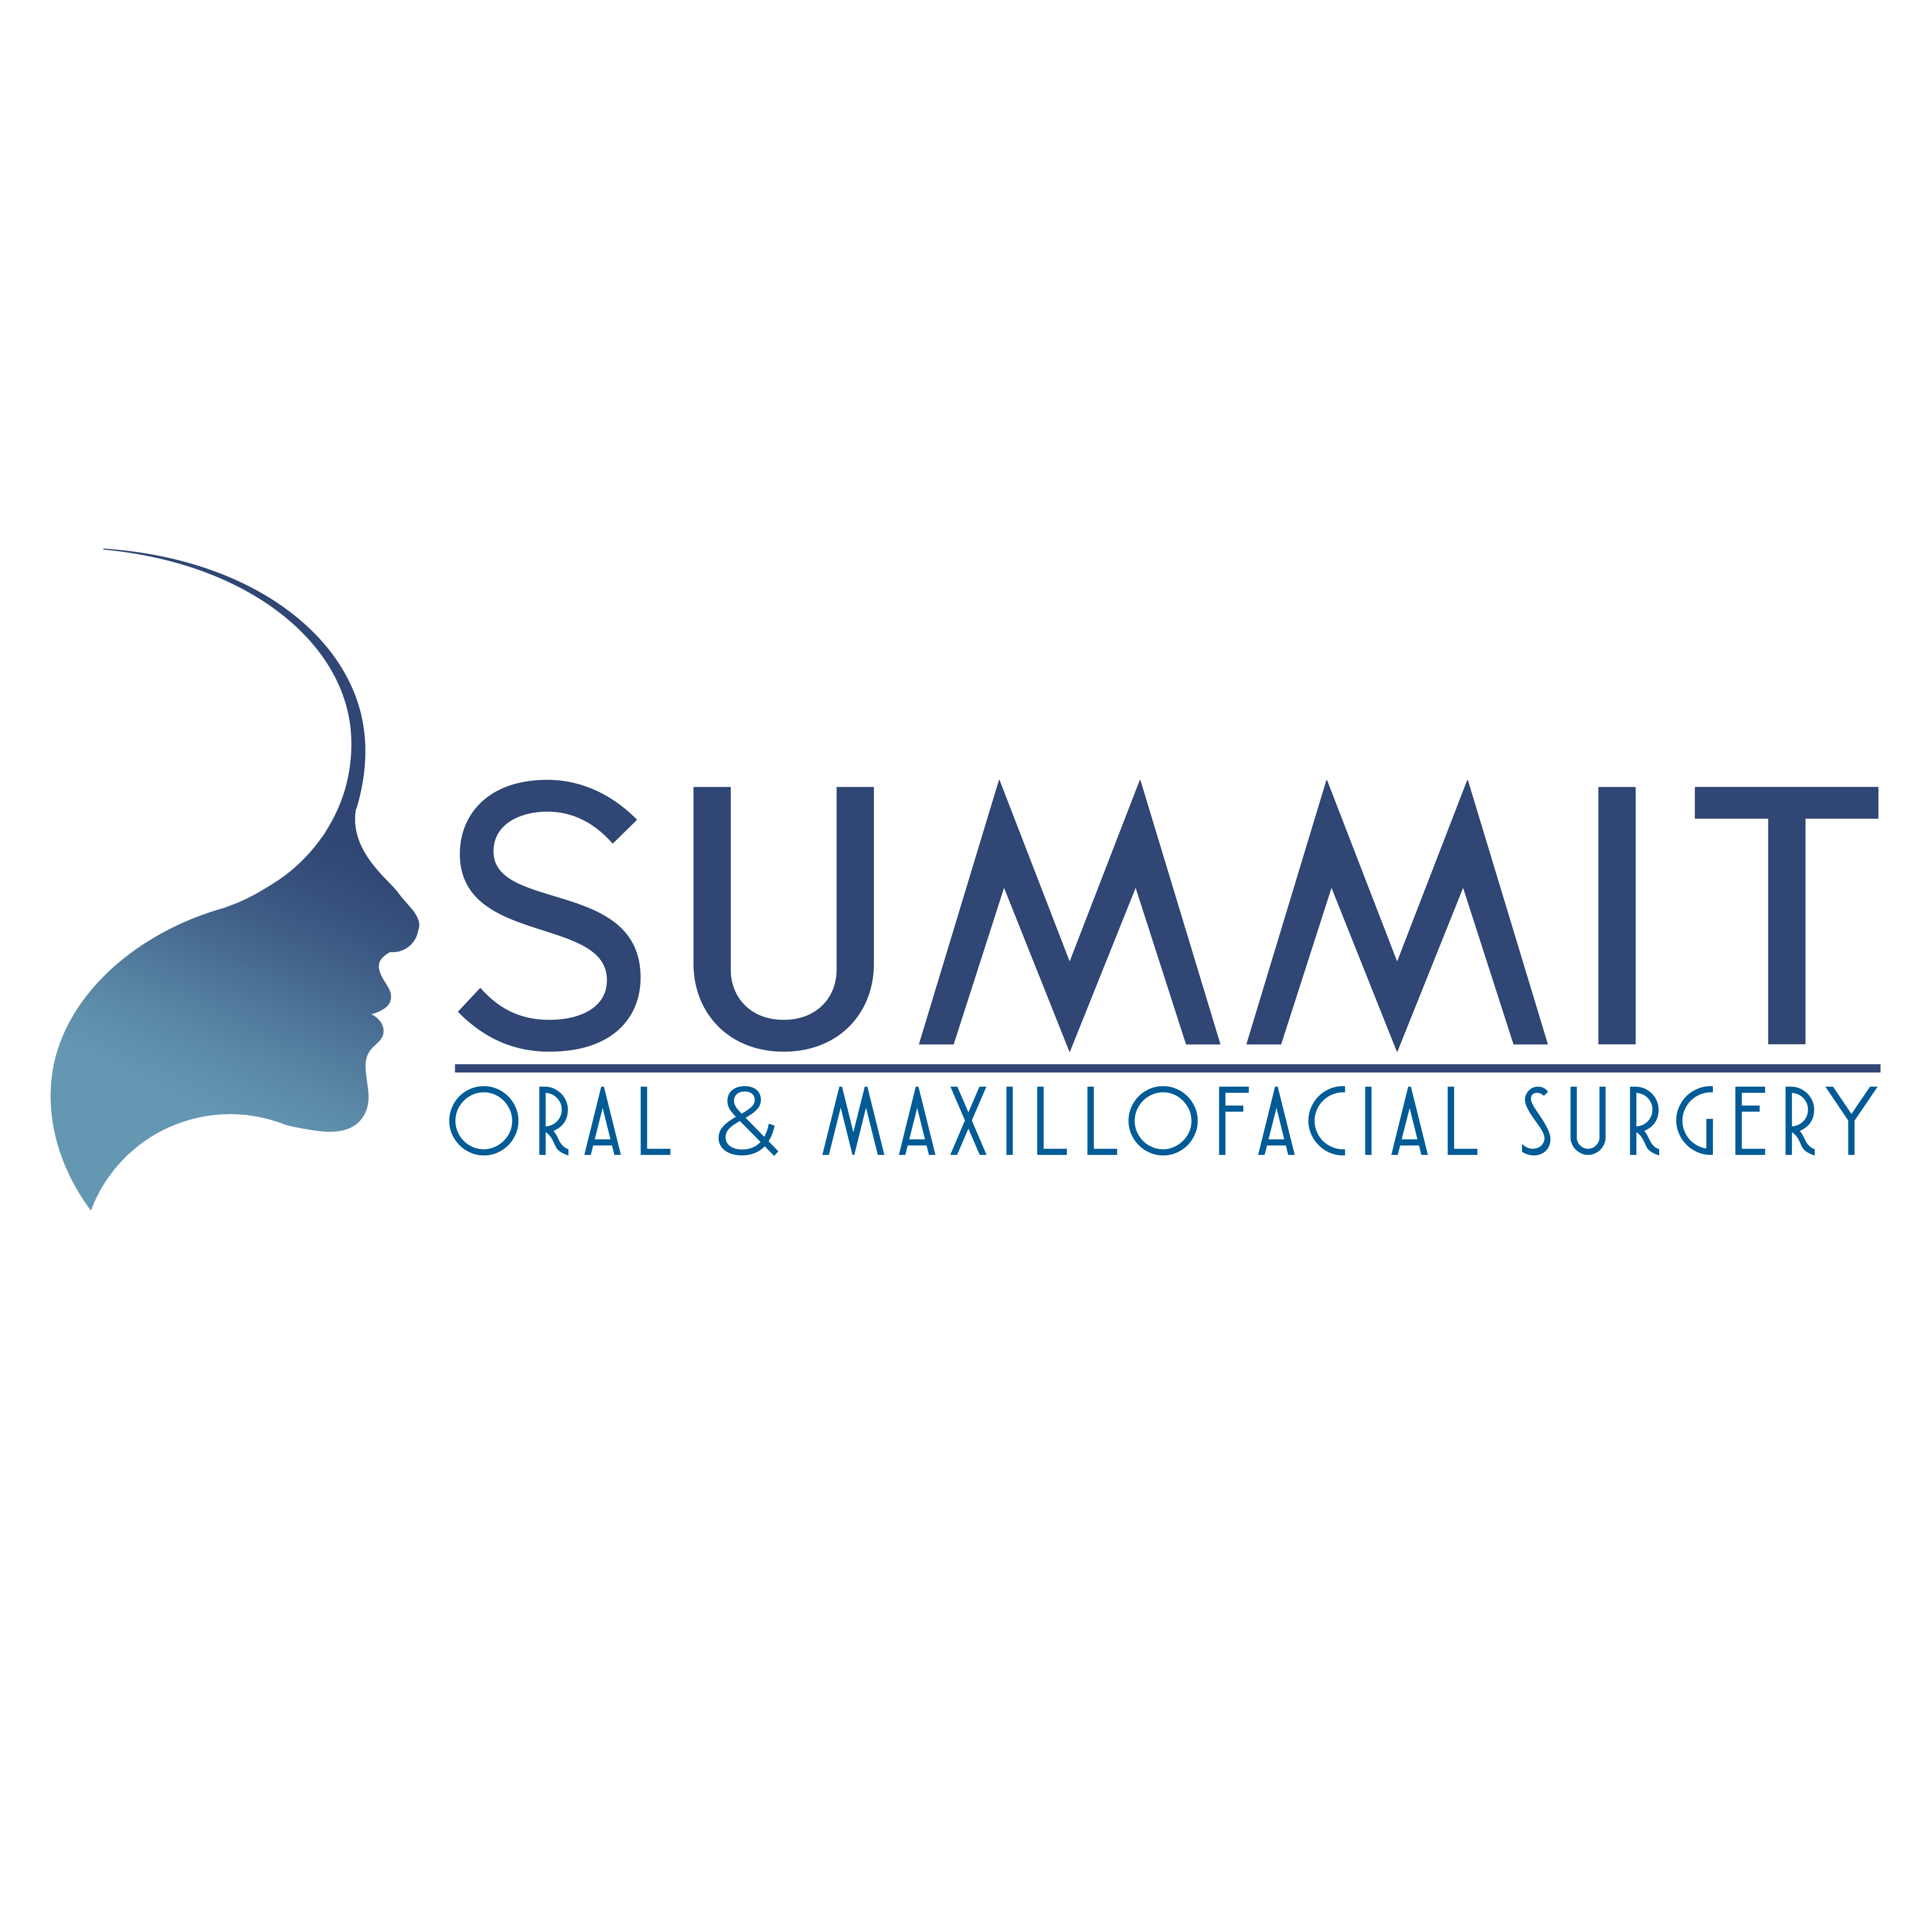 Summit Oral & Maxillofacial Surgery - New Baltimore, MI 48047 - (586)725-2400 | ShowMeLocal.com